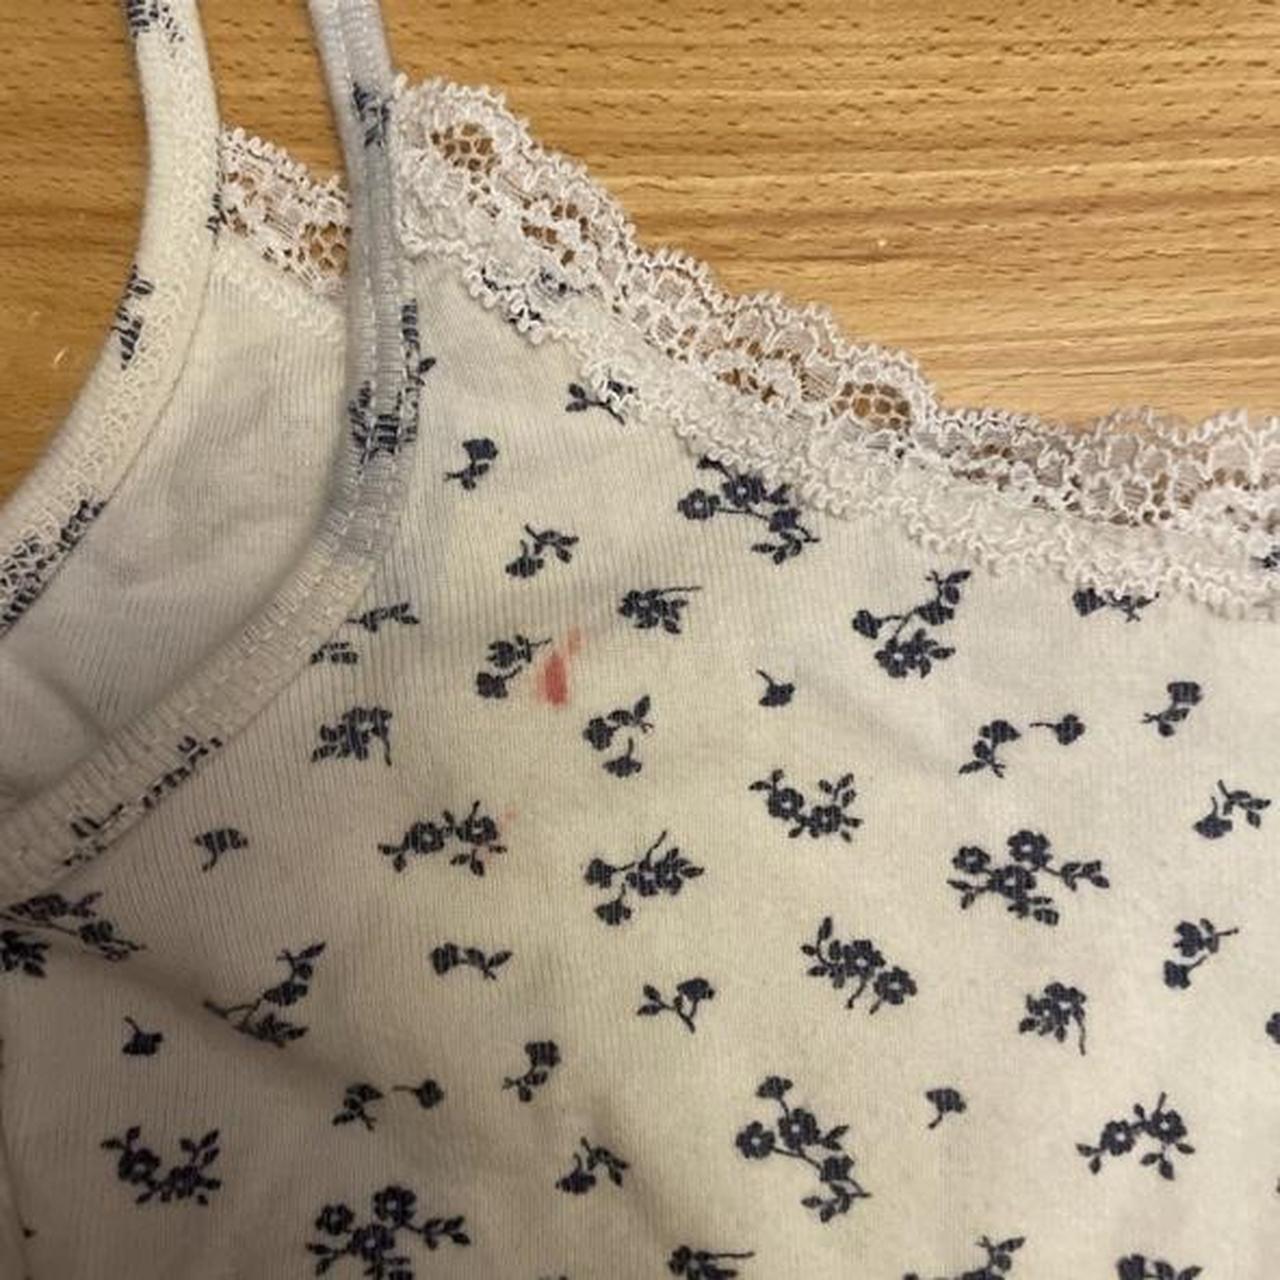 Brandy Melville Skylar floral lace tank💕in great